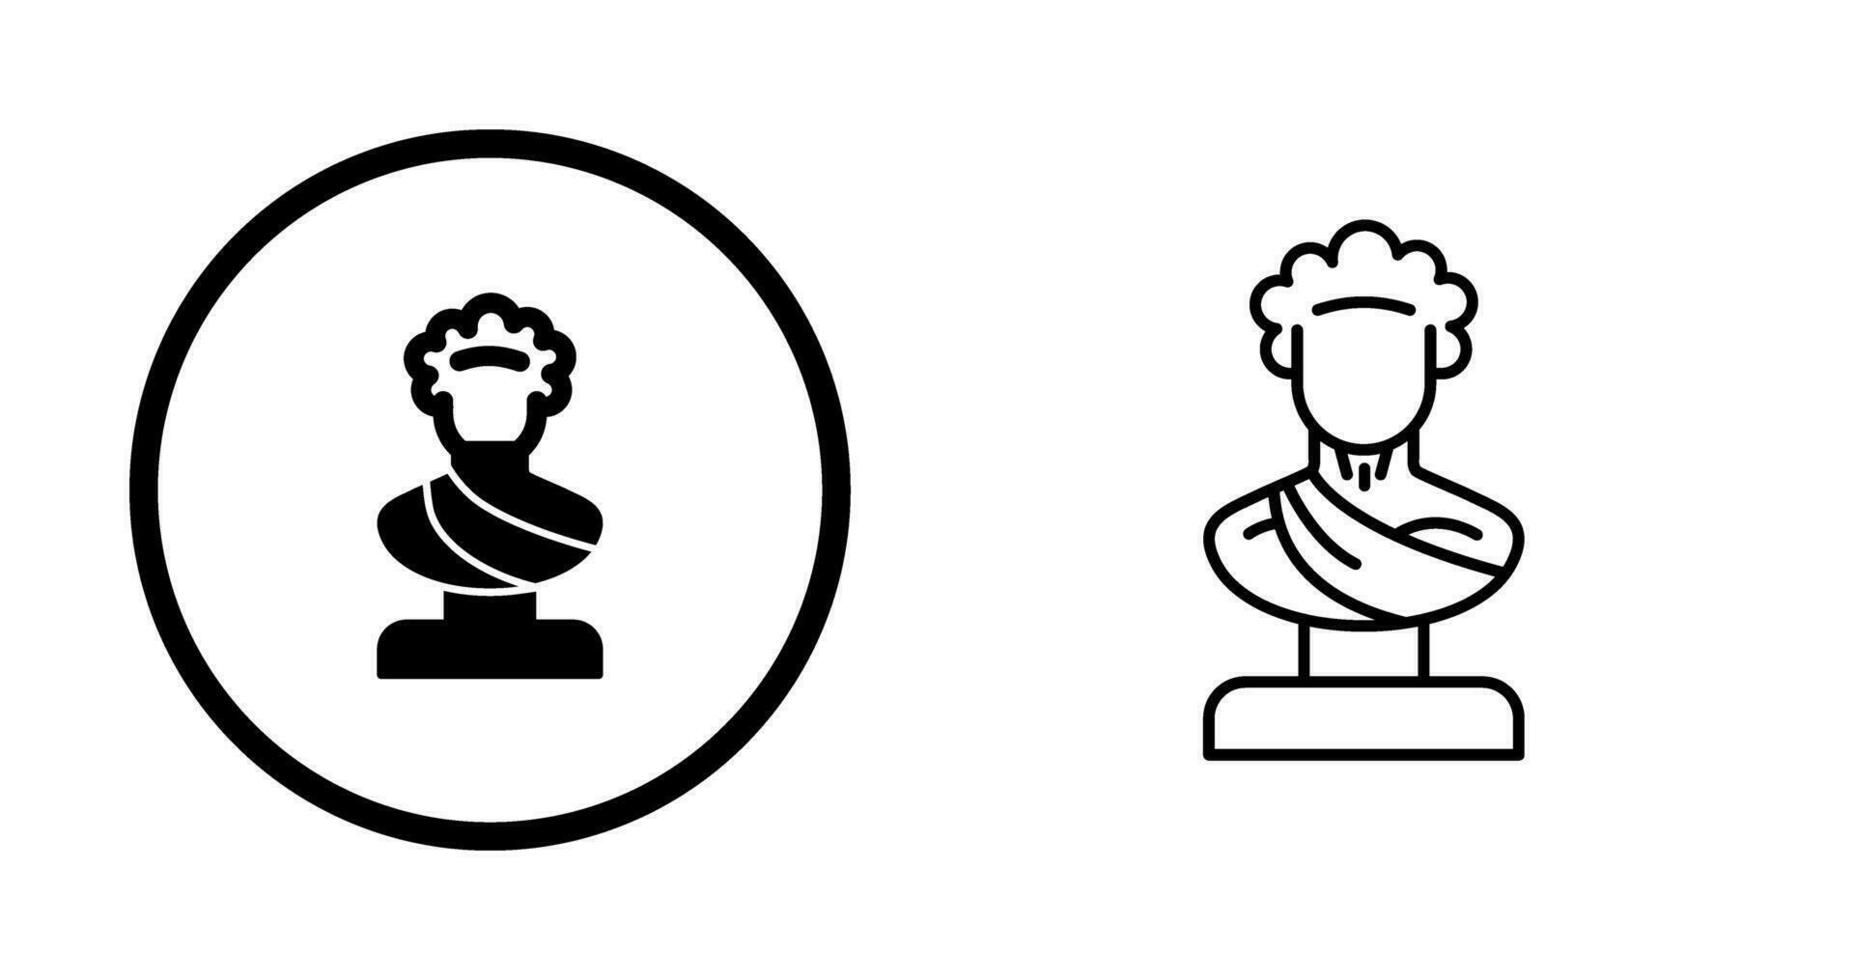 icono de vector de estatua